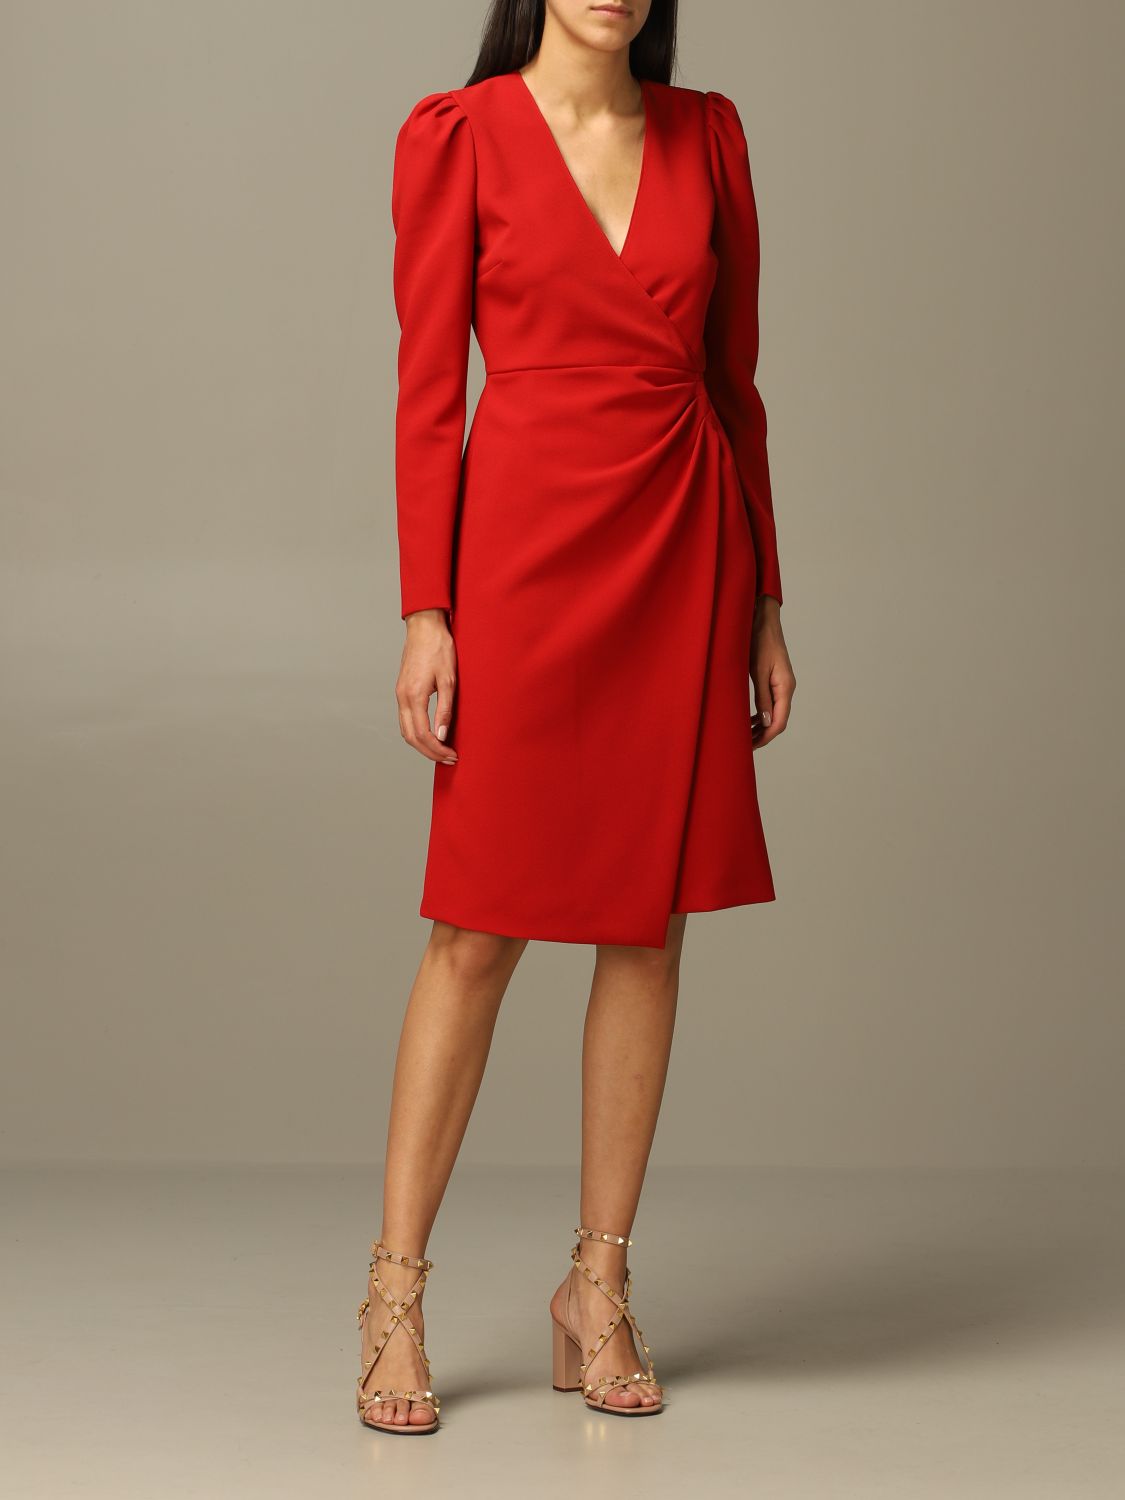 Red Valentino Outlet: dress double crêpe - Red | Valentino dress UR3VAT14 562 online on